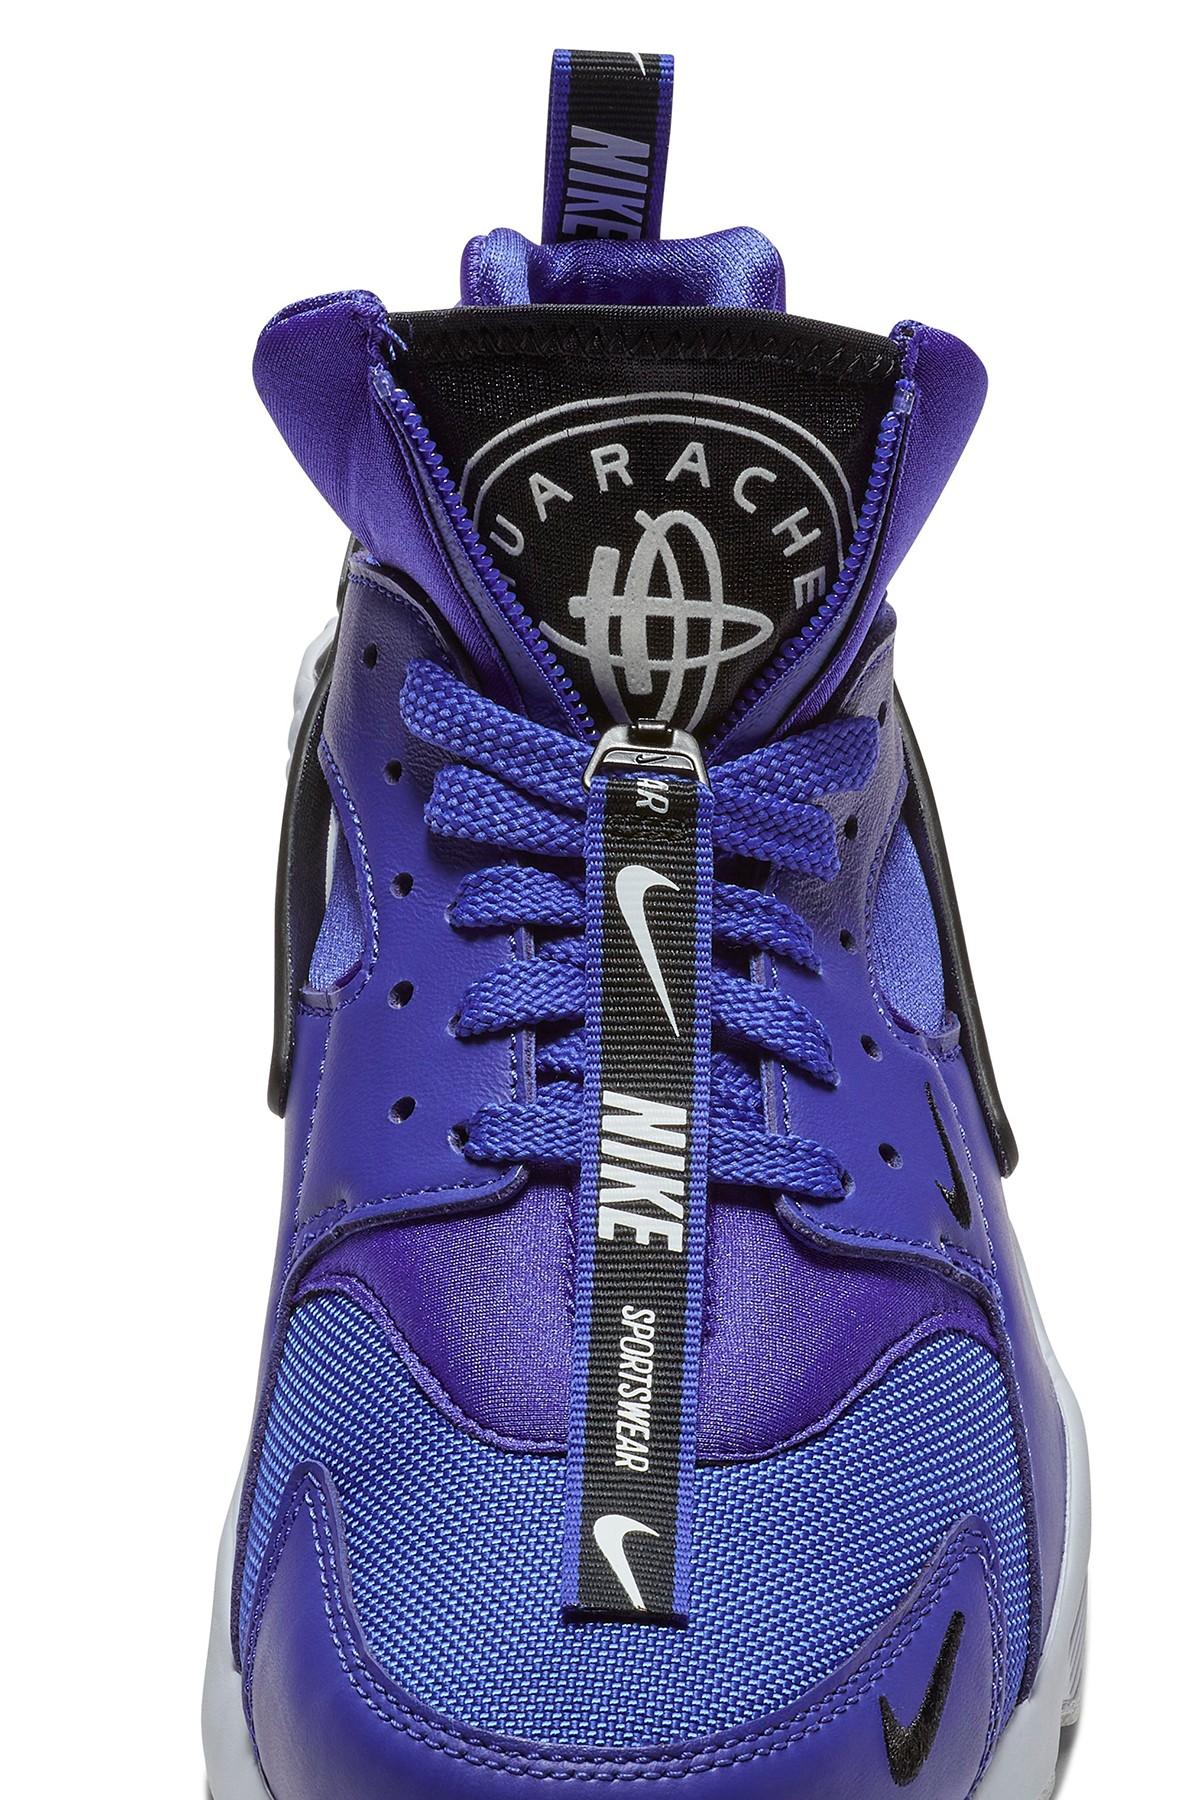 Nike Air Huarache Run Premium Zip Shoe for Men | Lyst